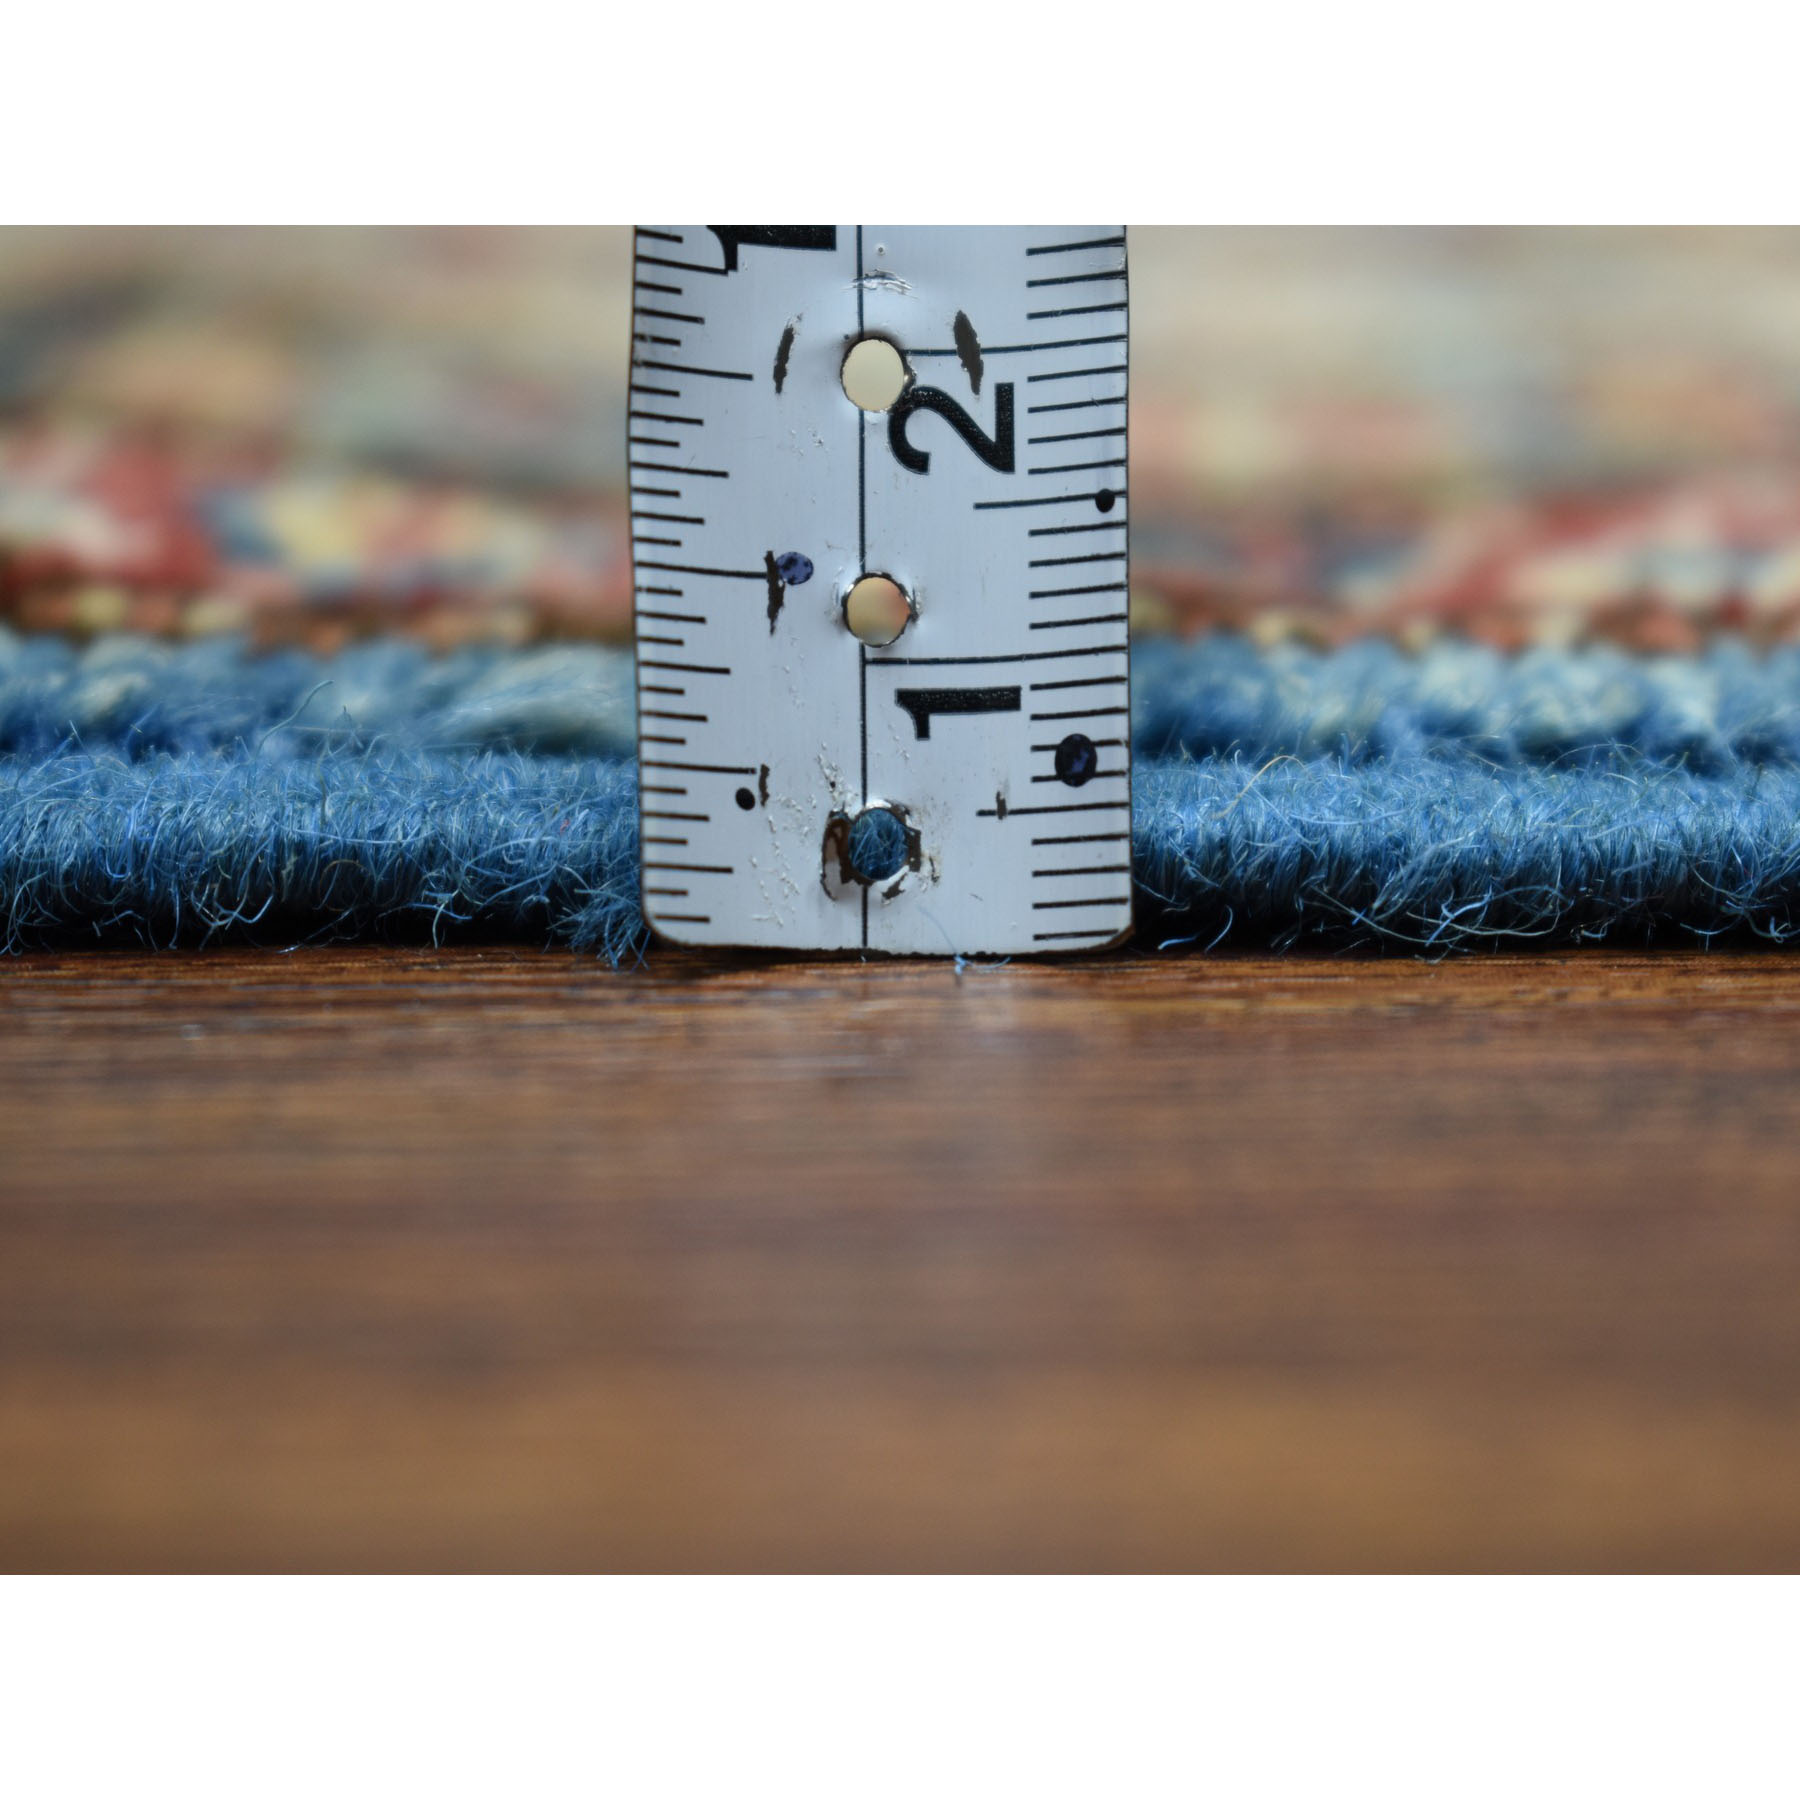 3-2 x4-9  Blue Super Kazak Geometric Design Pure Wool Hand-Knotted Oriental Rug 